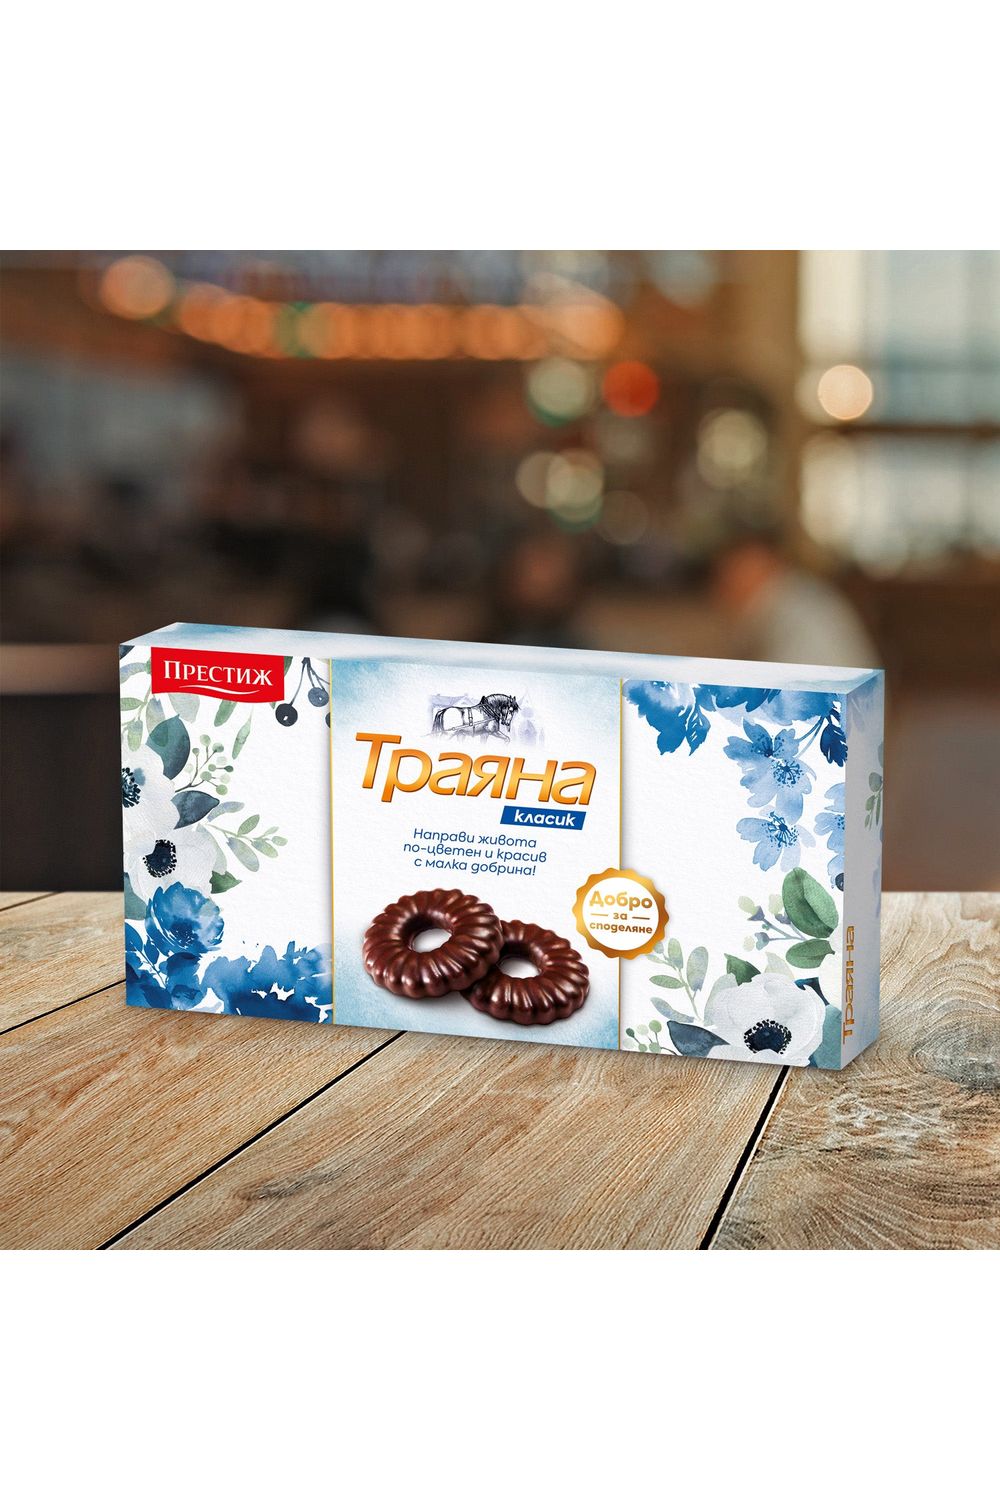 TRAYANA - Classic Chocolate Coated Cookies Prestige - 160g